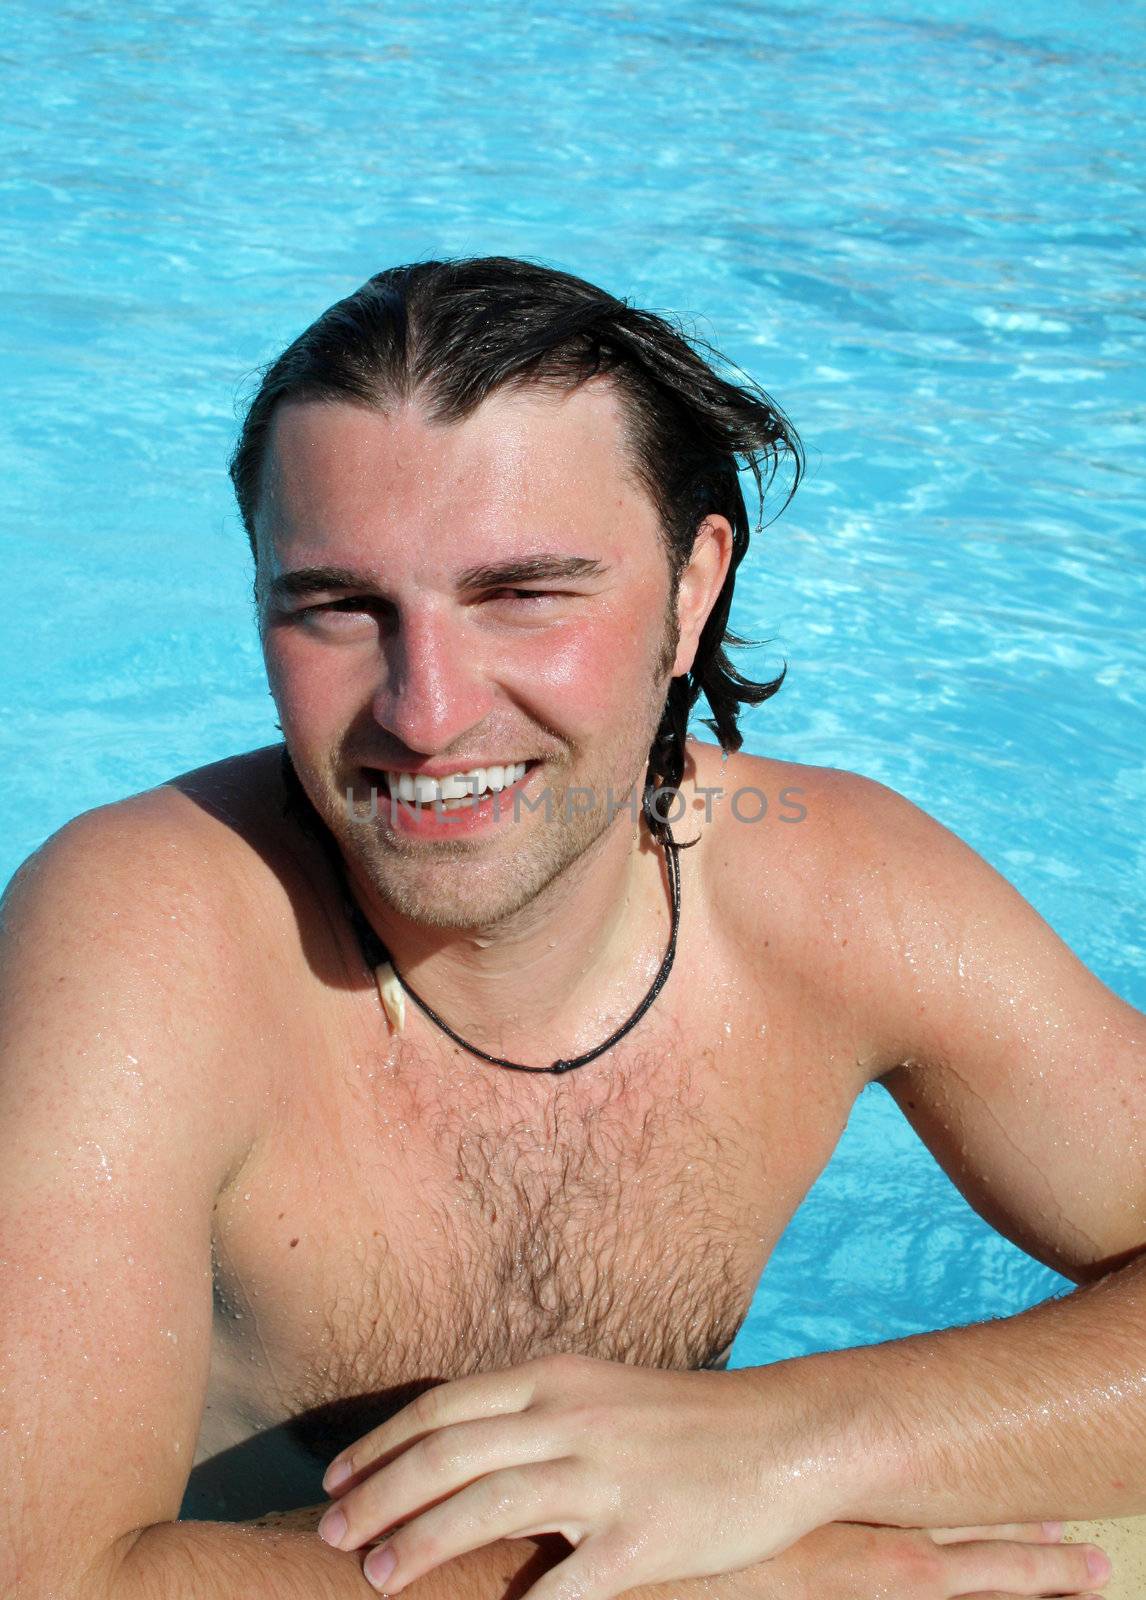 Man posing in pool by photochecker